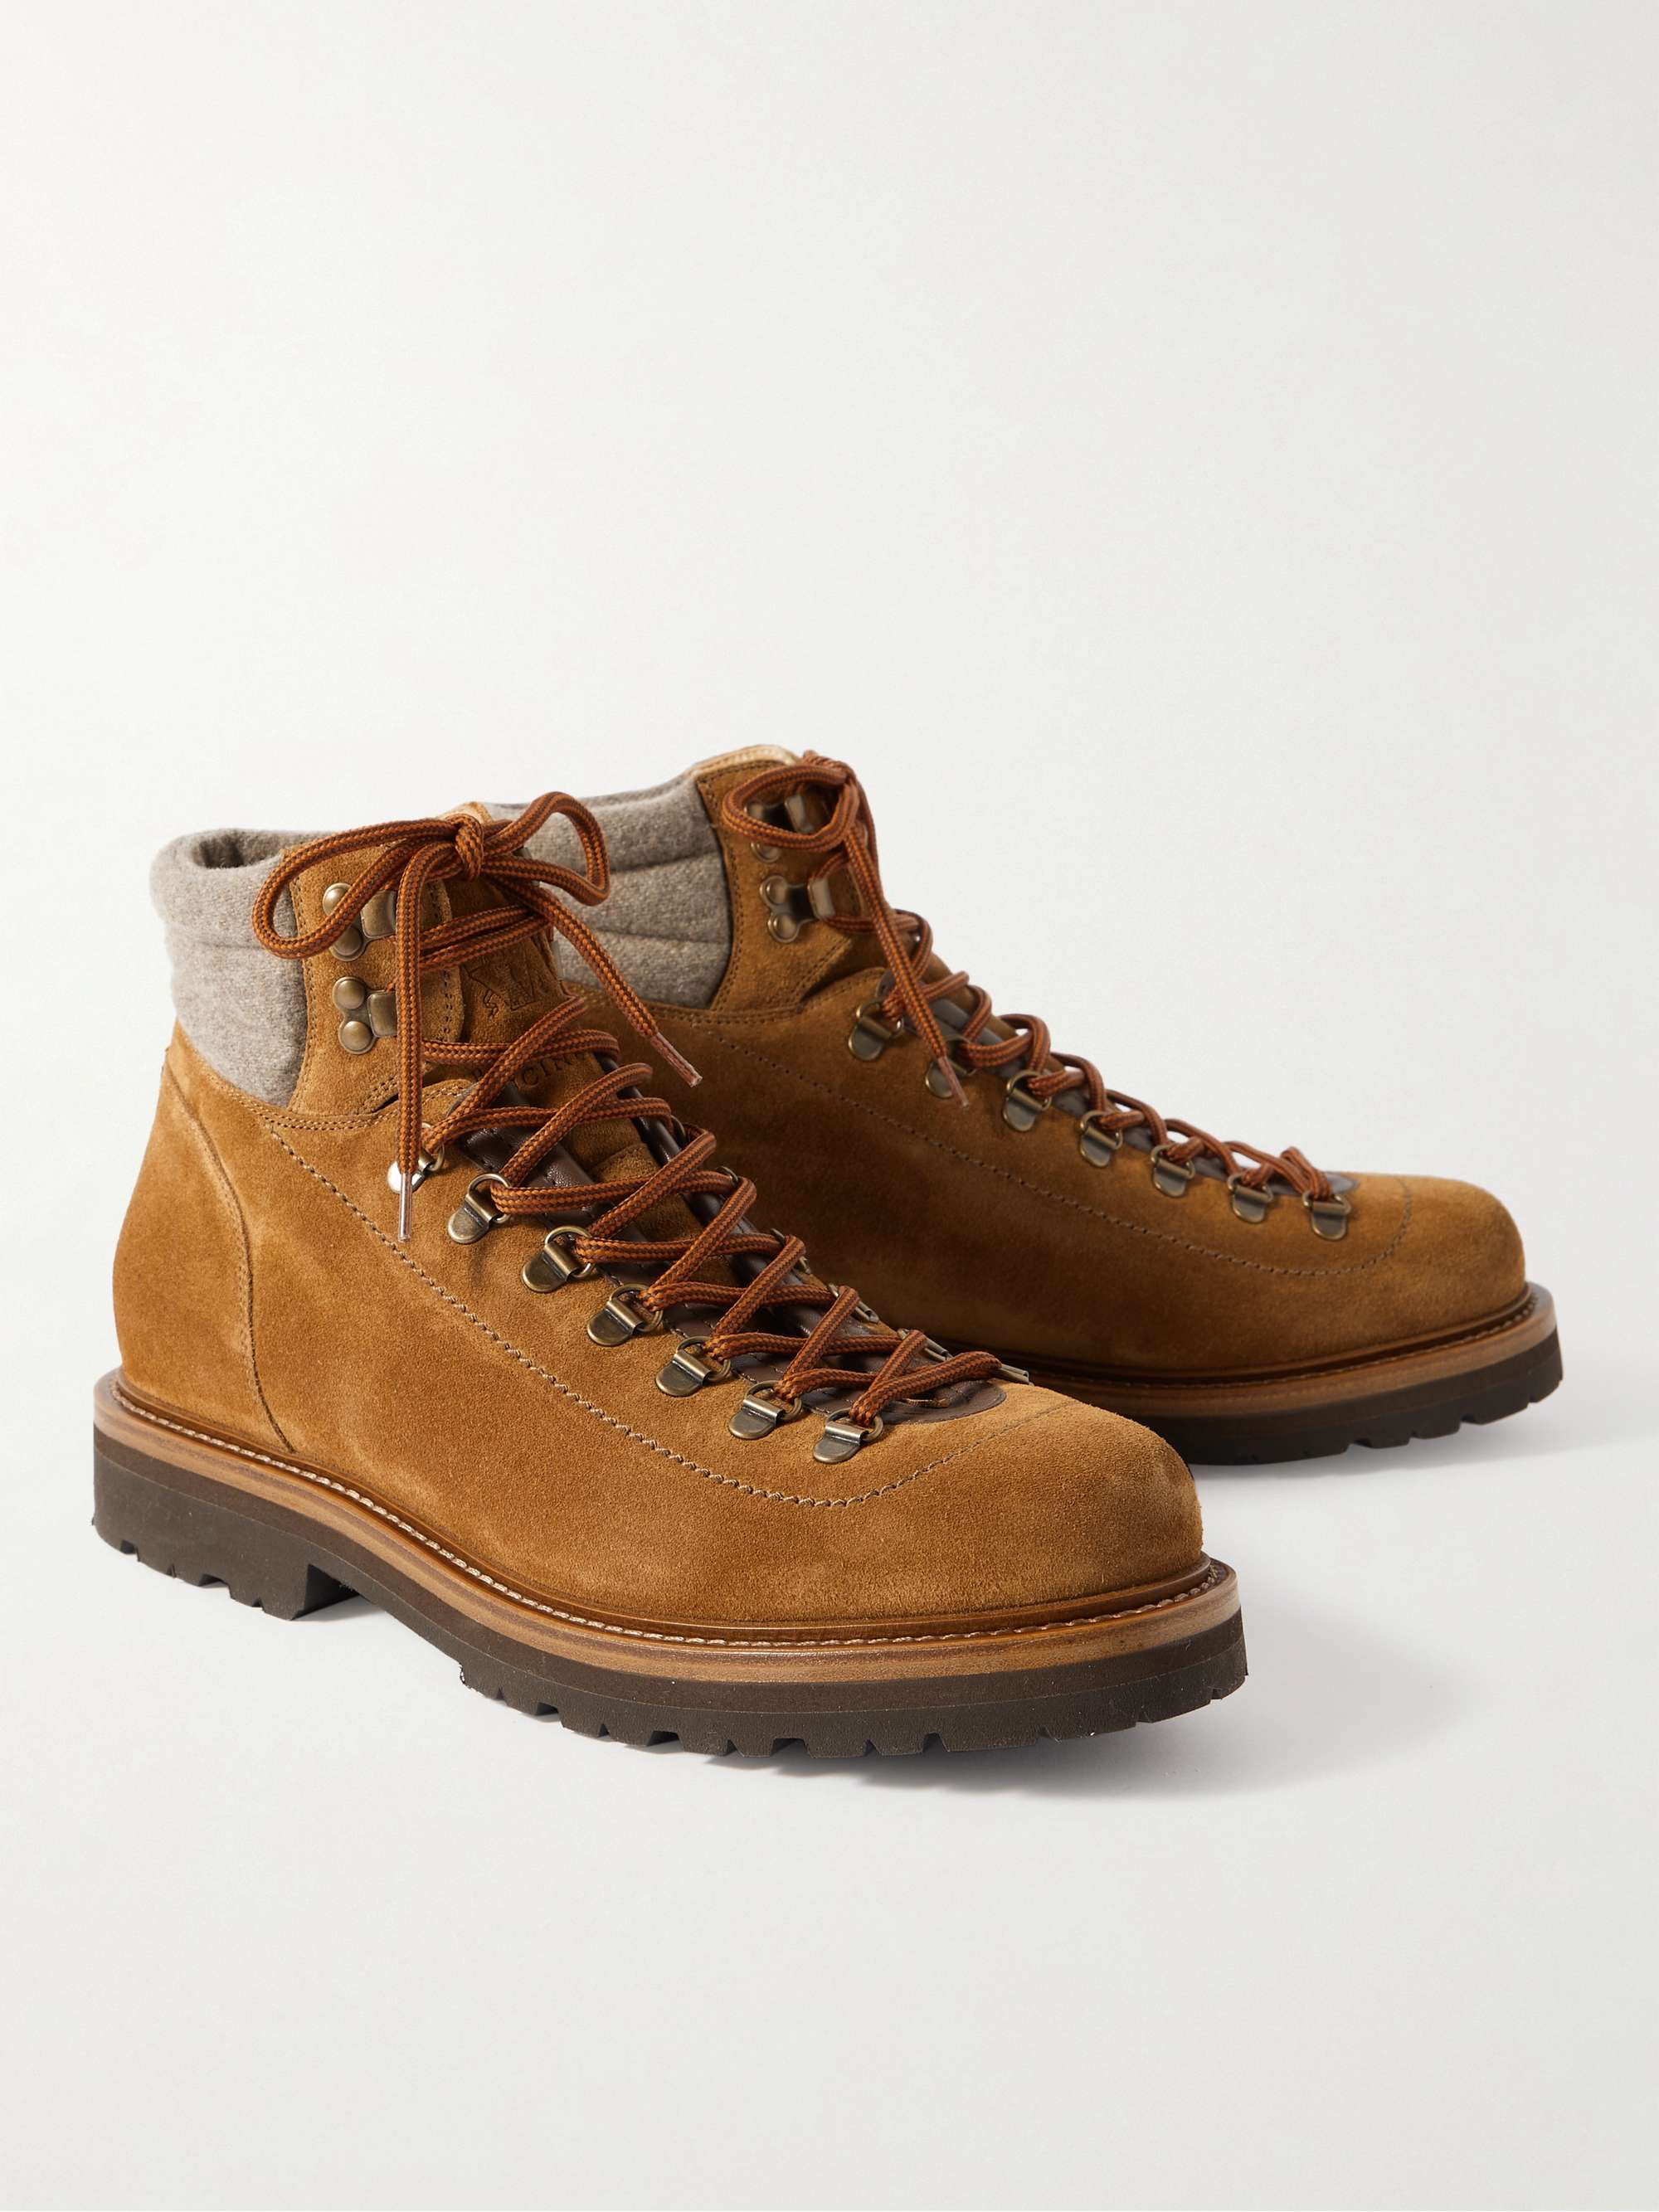 BRUNELLO CUCINELLI Wool-Trimmed Suede Hiking Boots for Men | MR PORTER